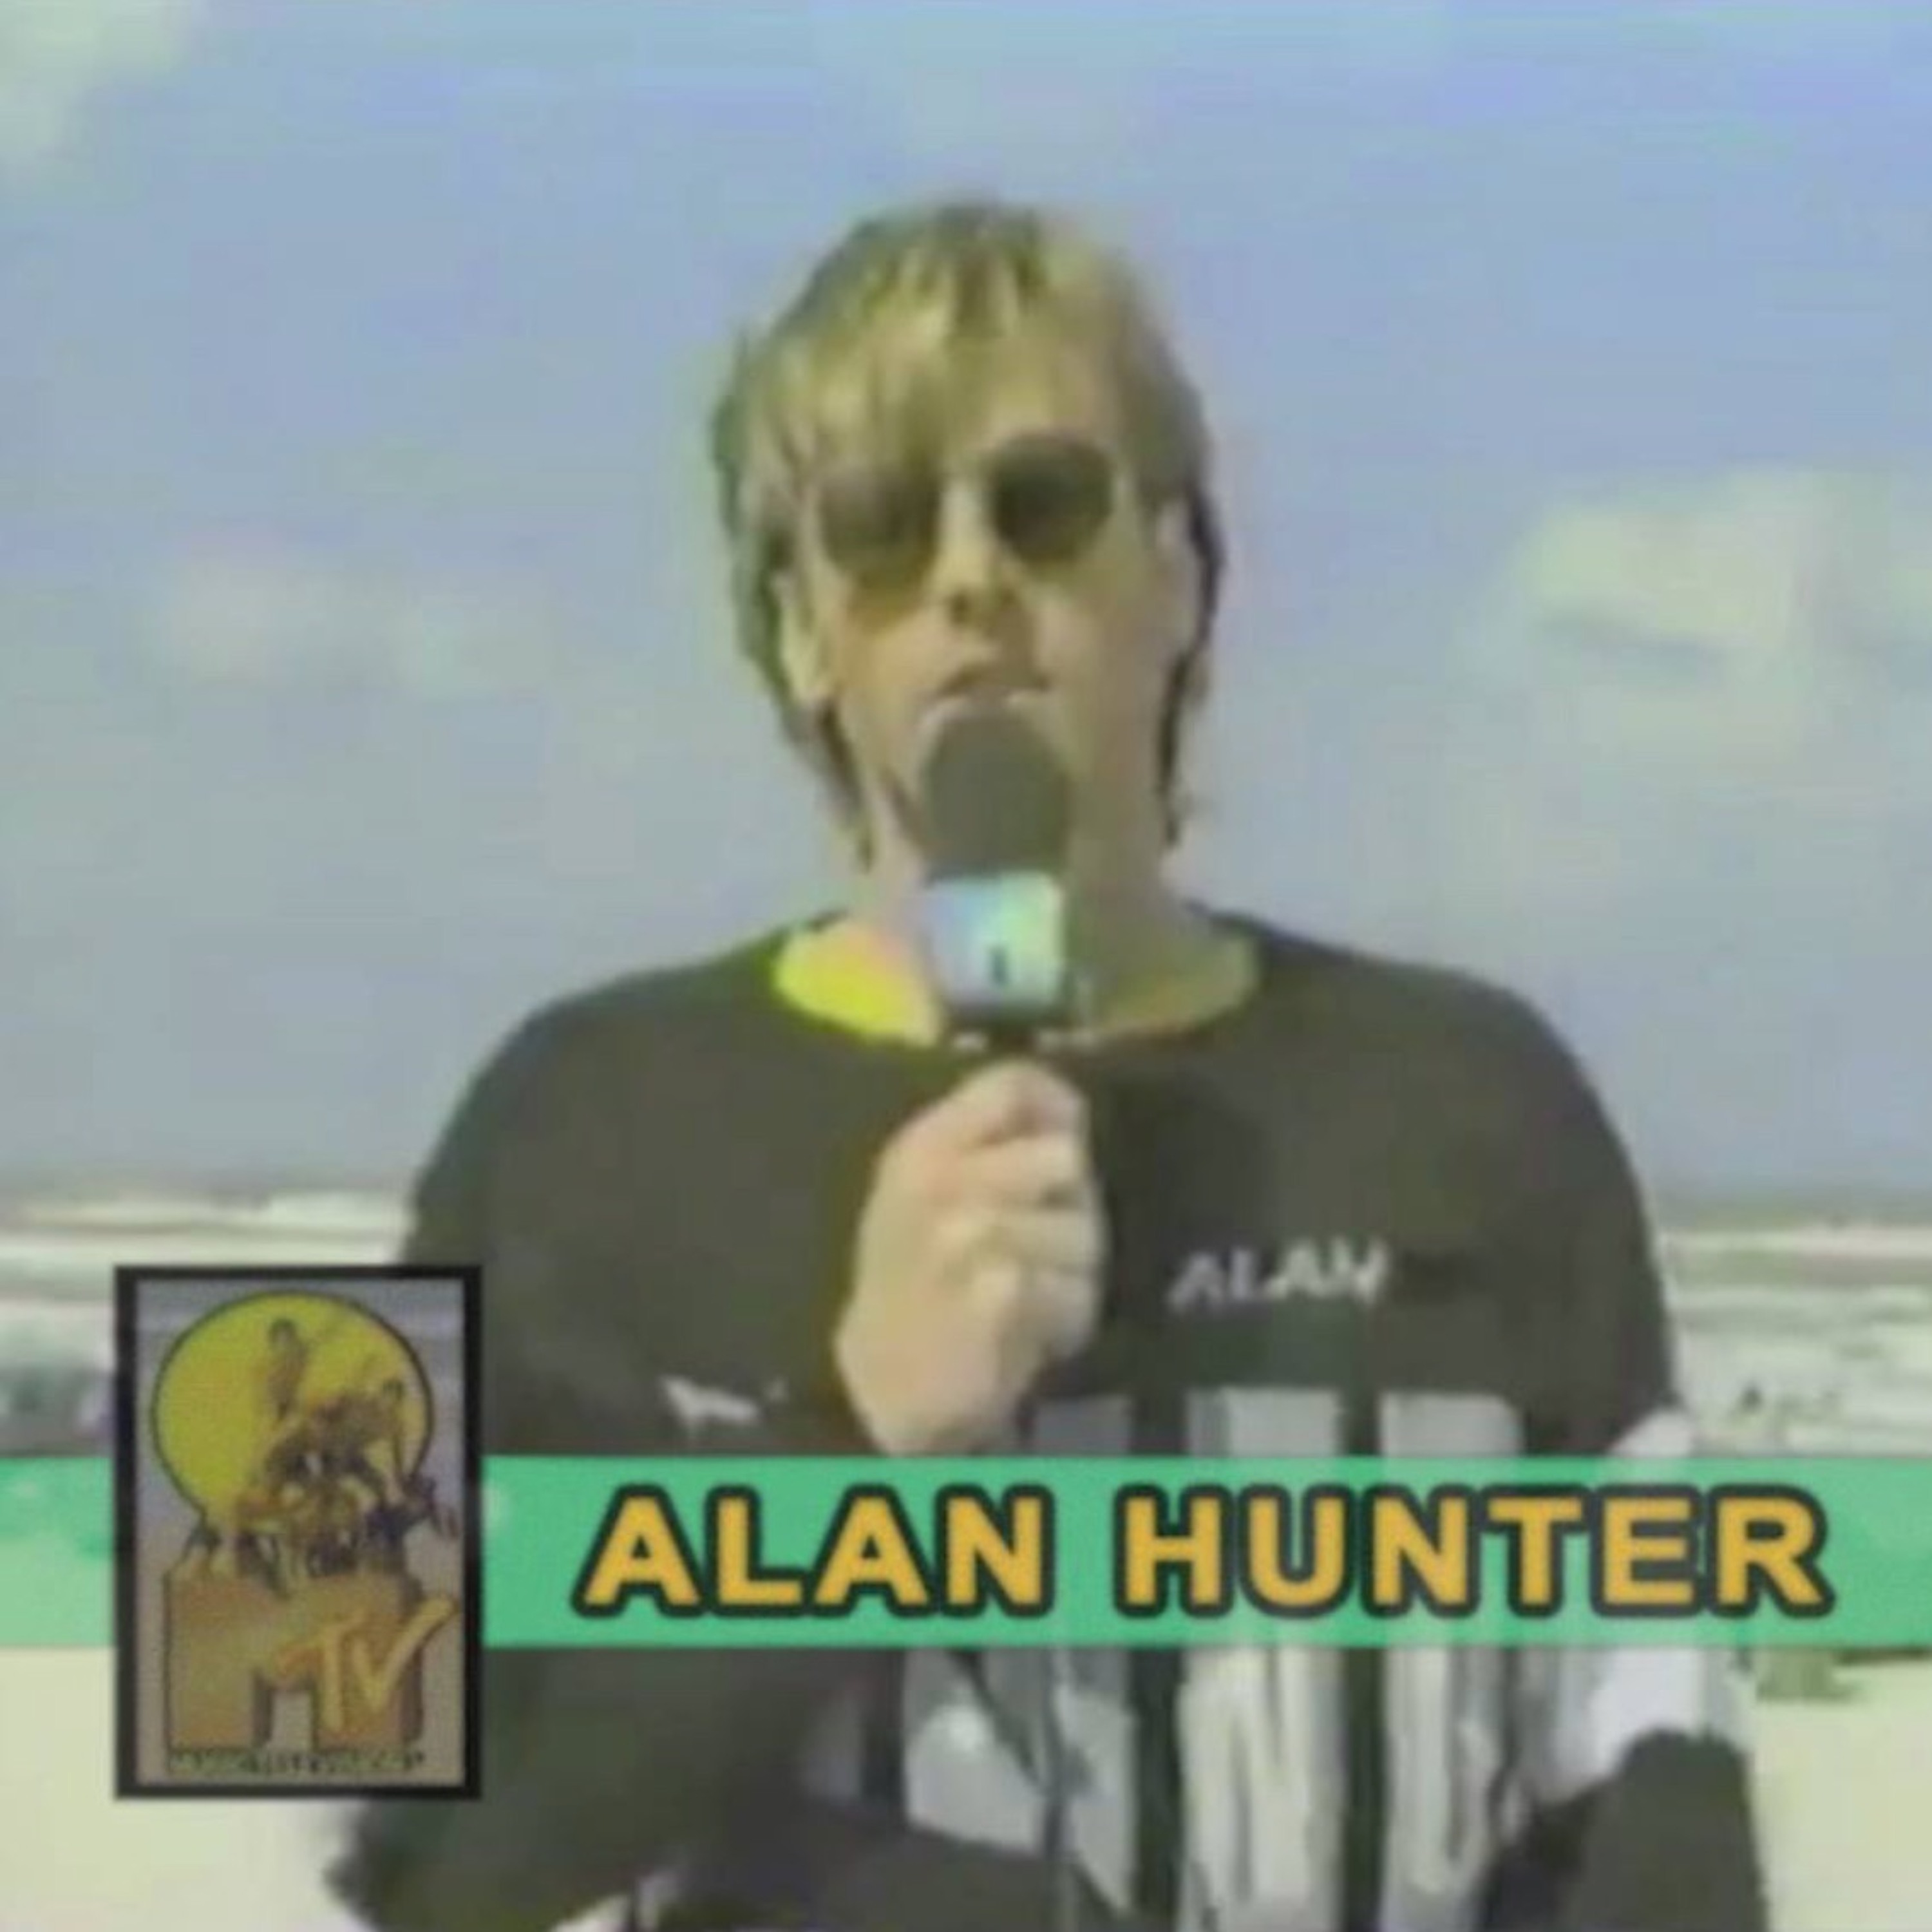 30A Show: Alan Hunter the First MTV VJ